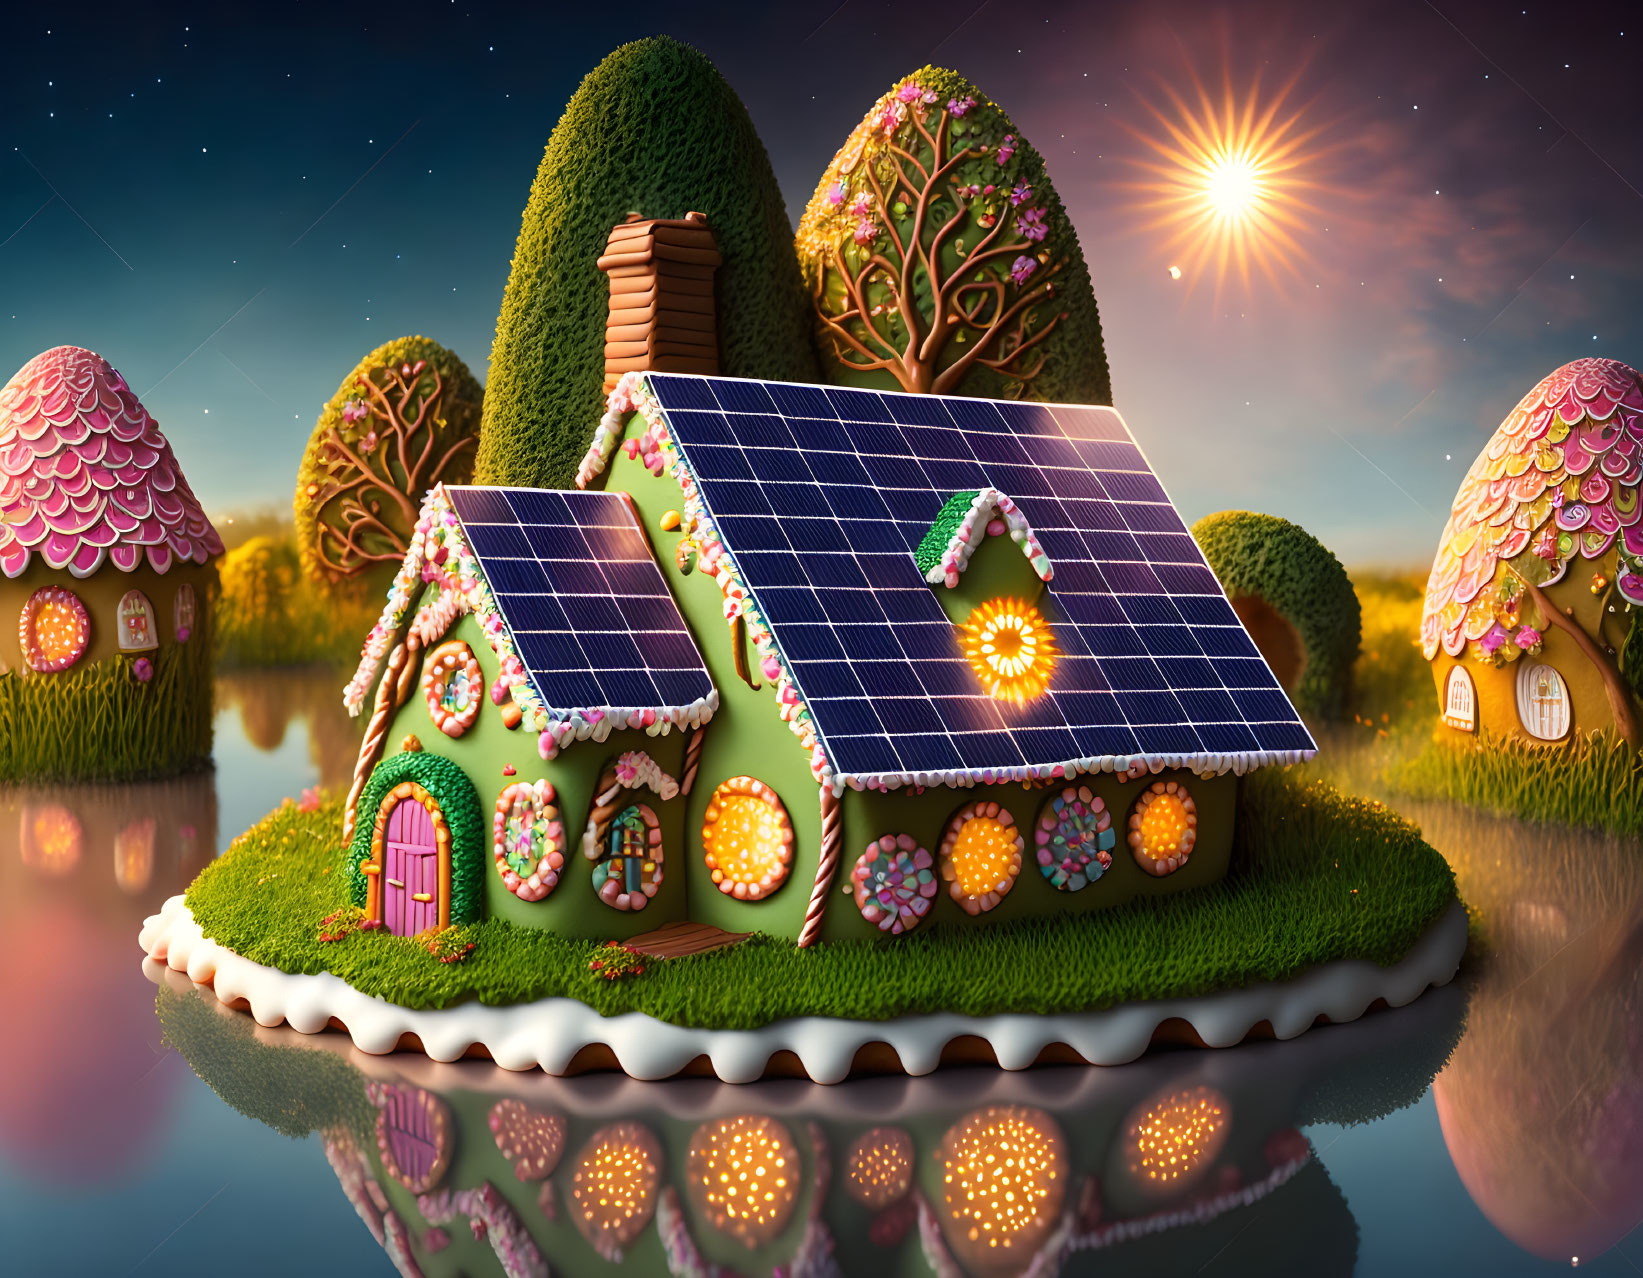 Solar gingerbread house